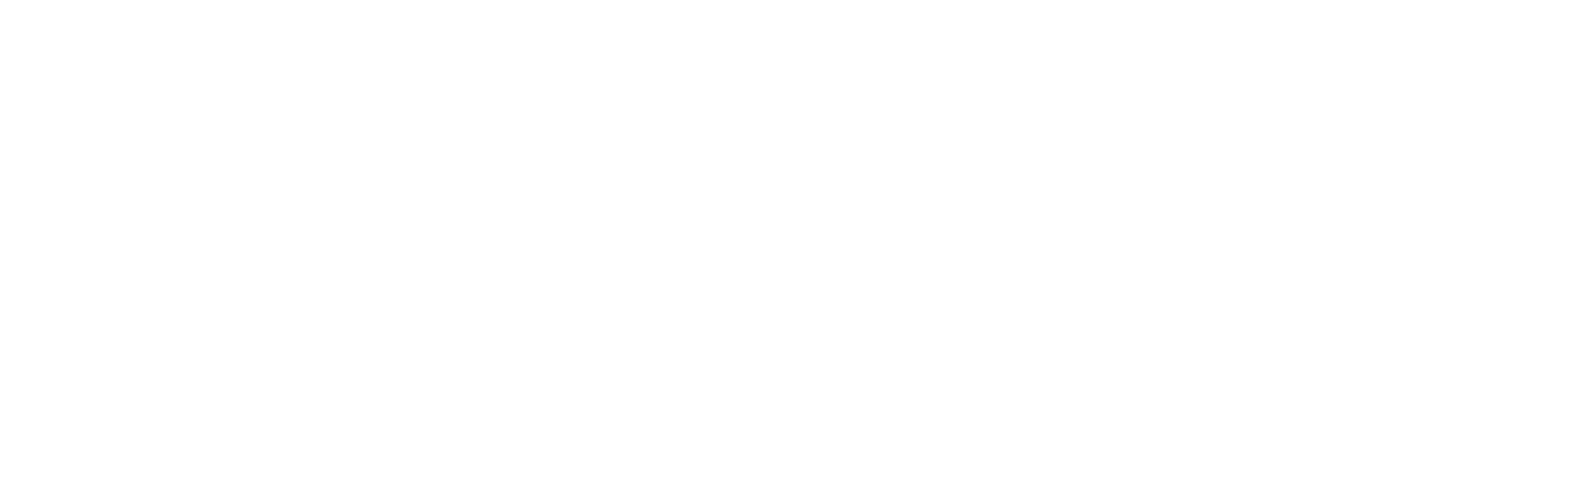 Capri Holdings logo large for dark backgrounds (transparent PNG)